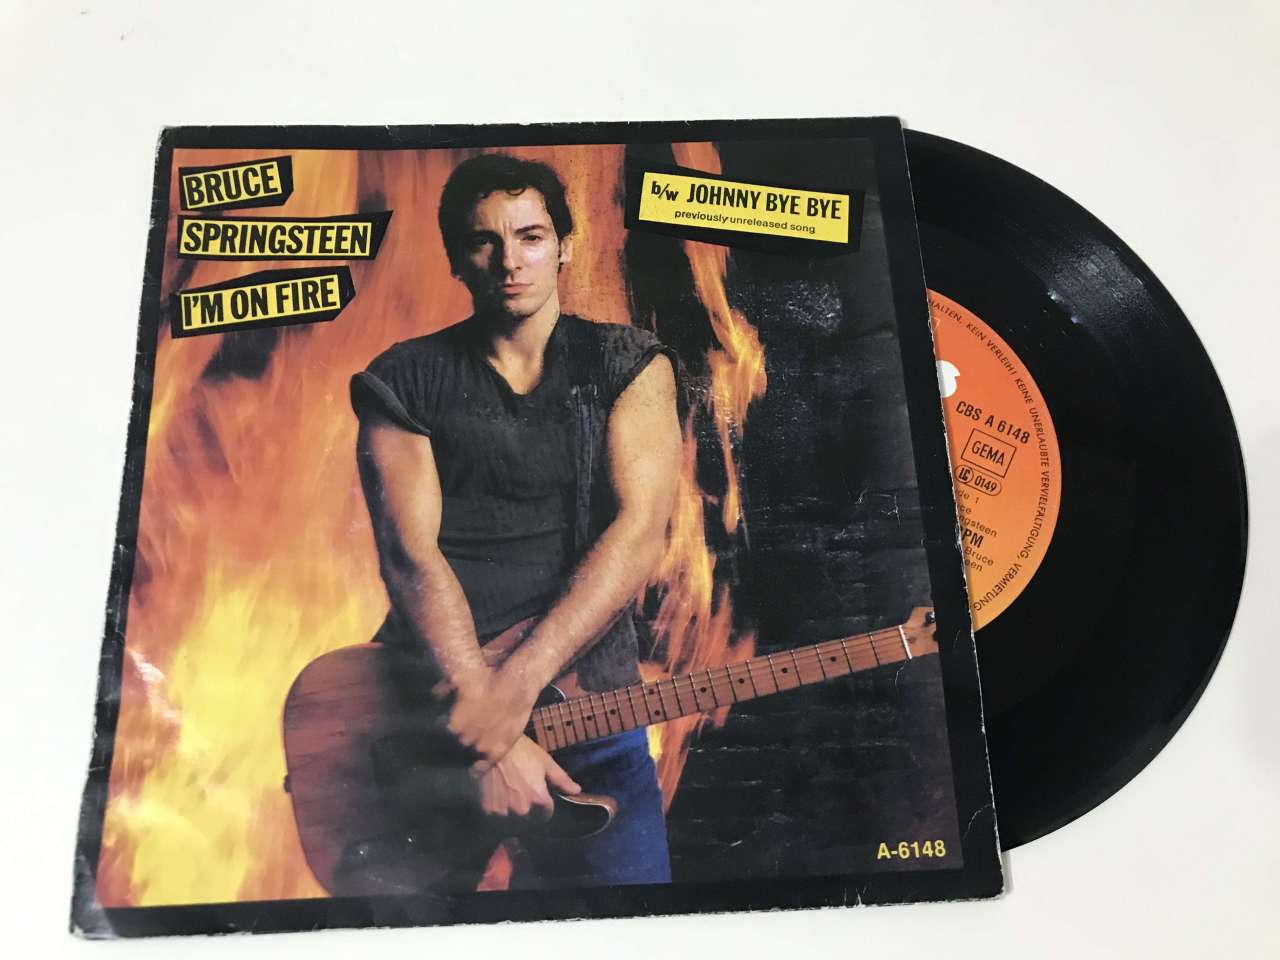 Bruce Springsteen – I'm On Fire